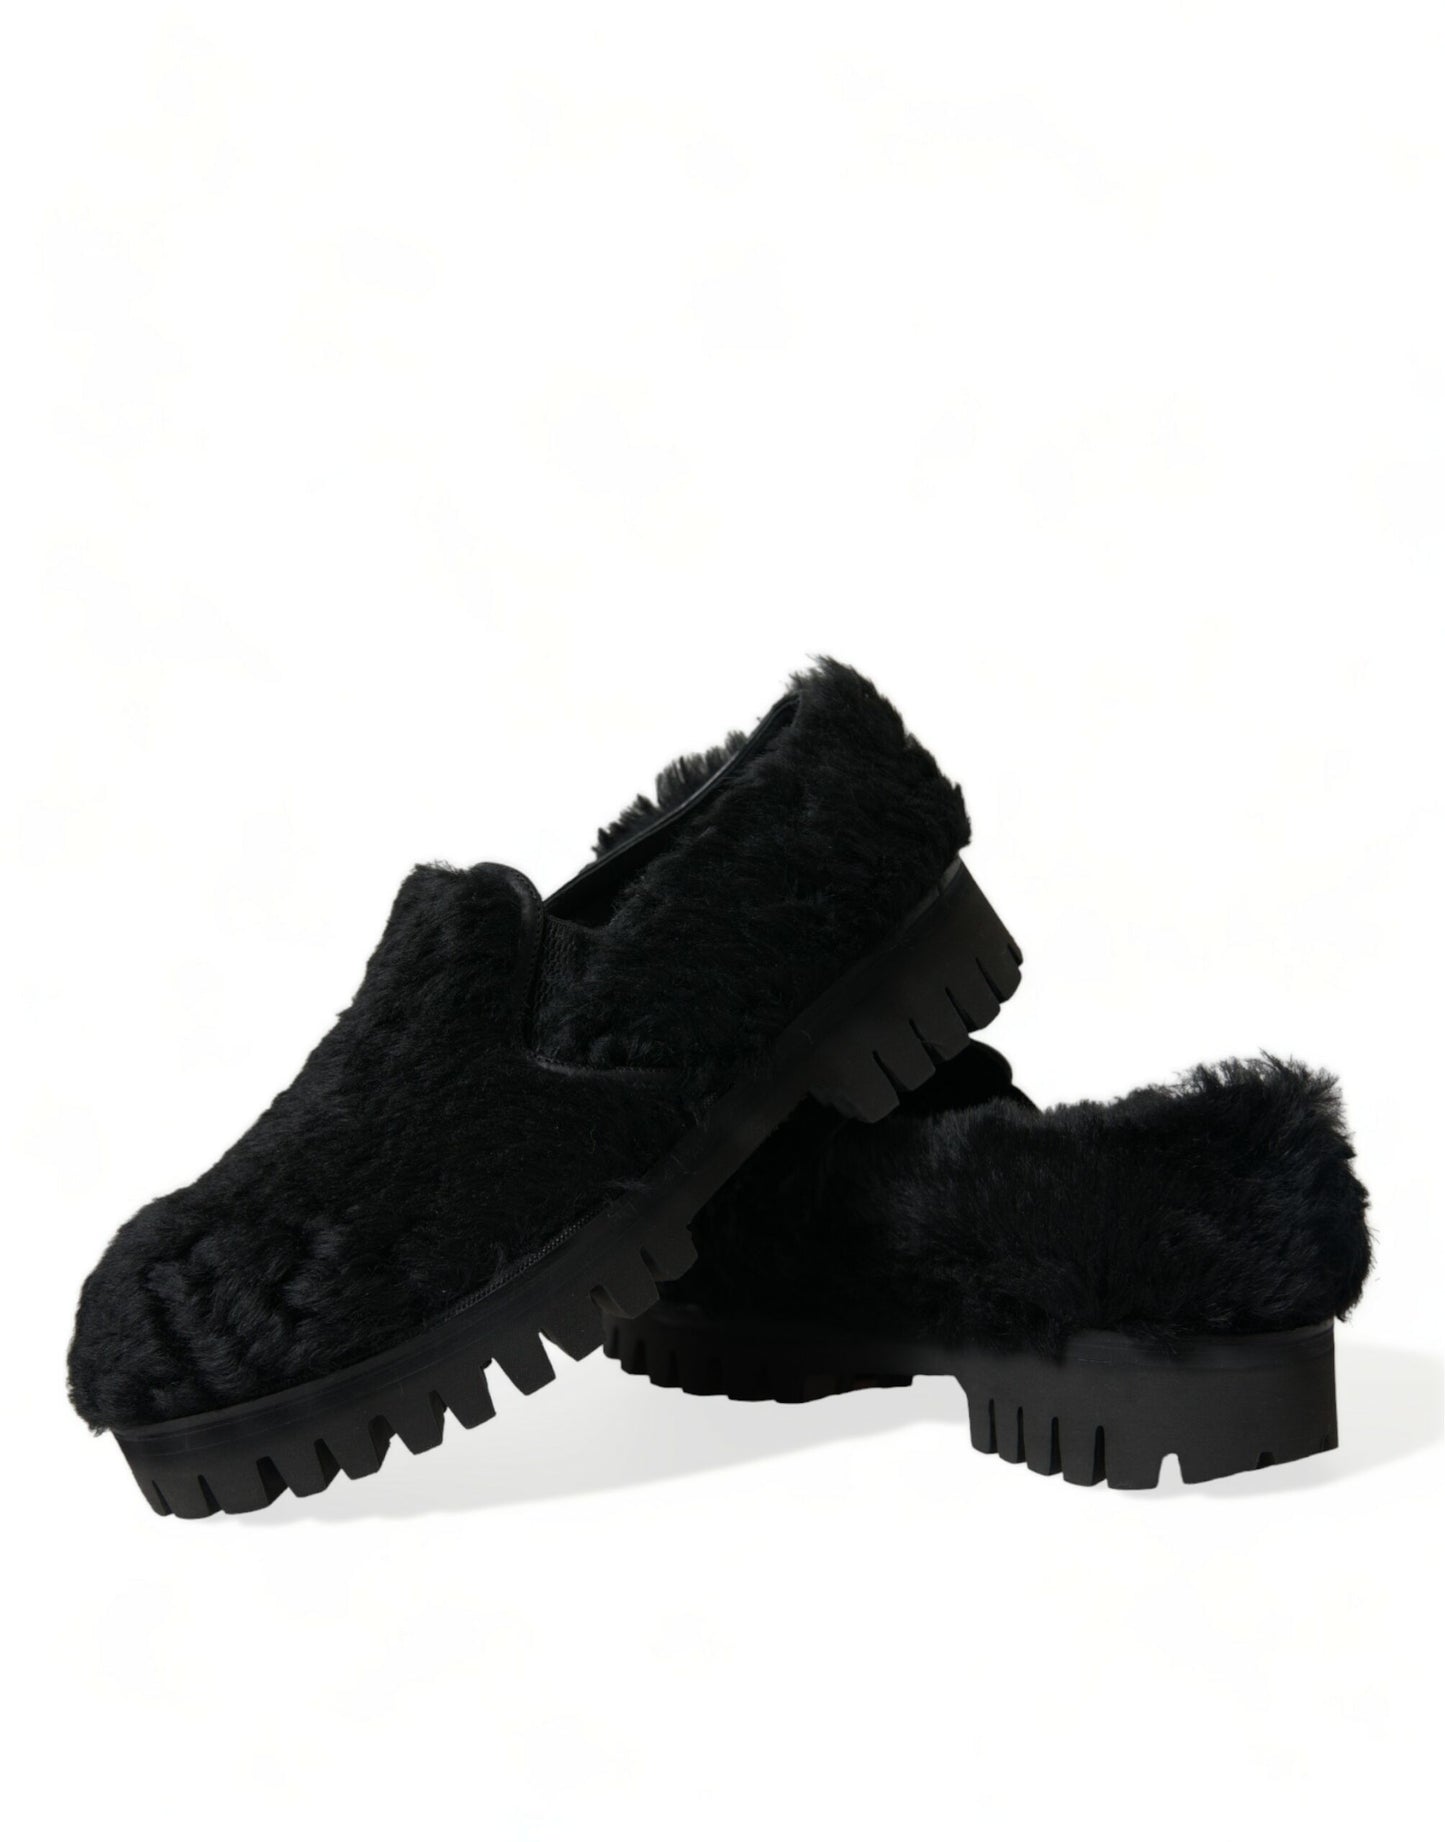 Dolce & gabbana black fur slip on loafers for men